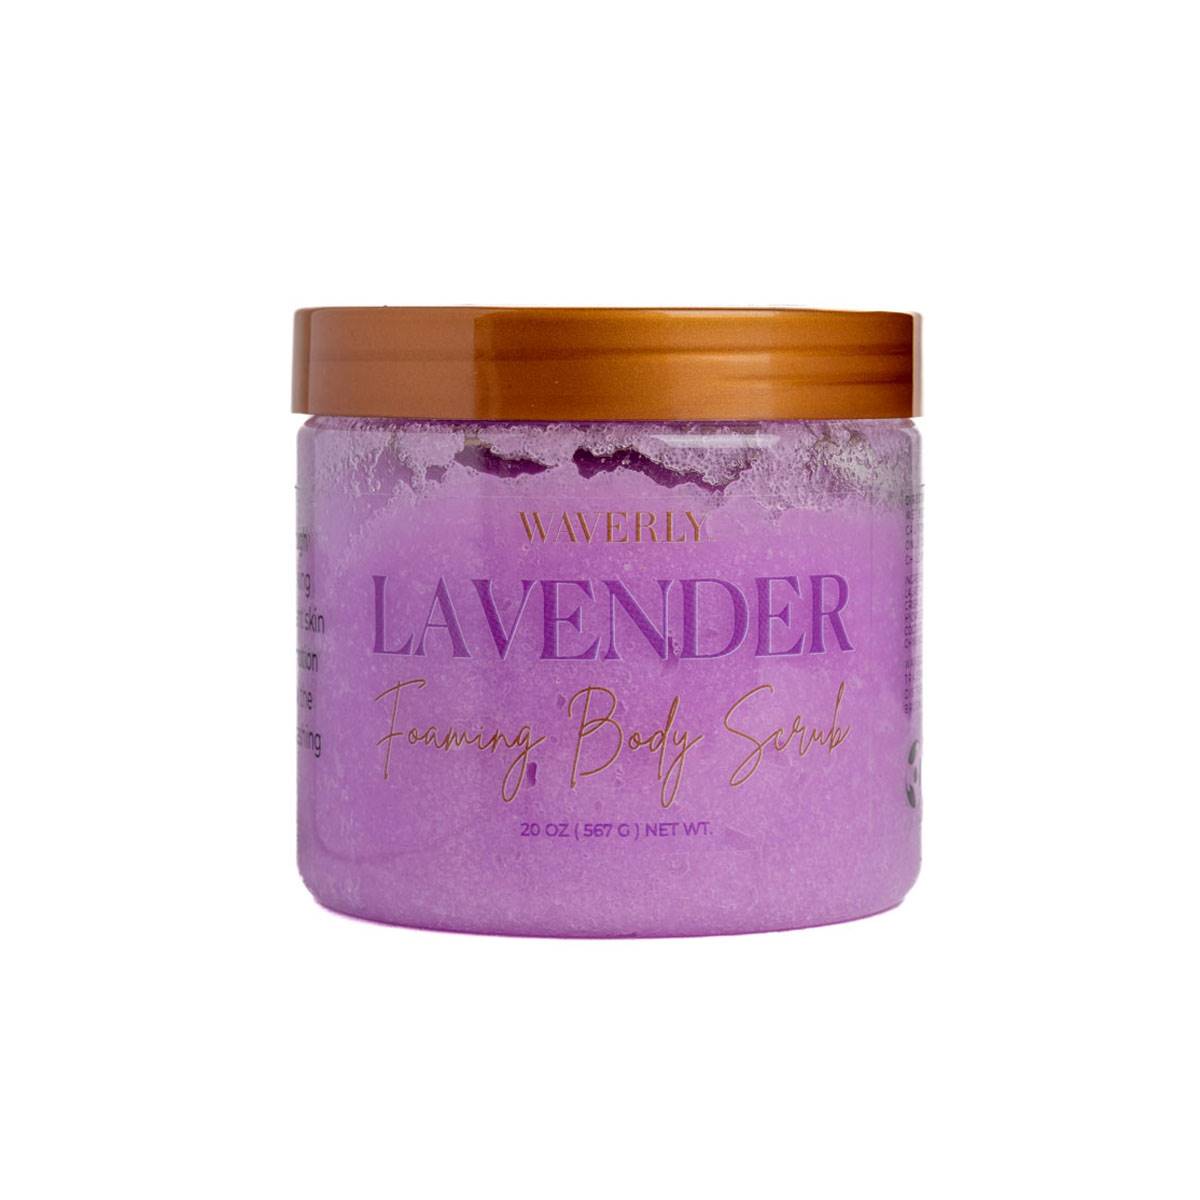 Waverly Lavender Foaming Body Scrub